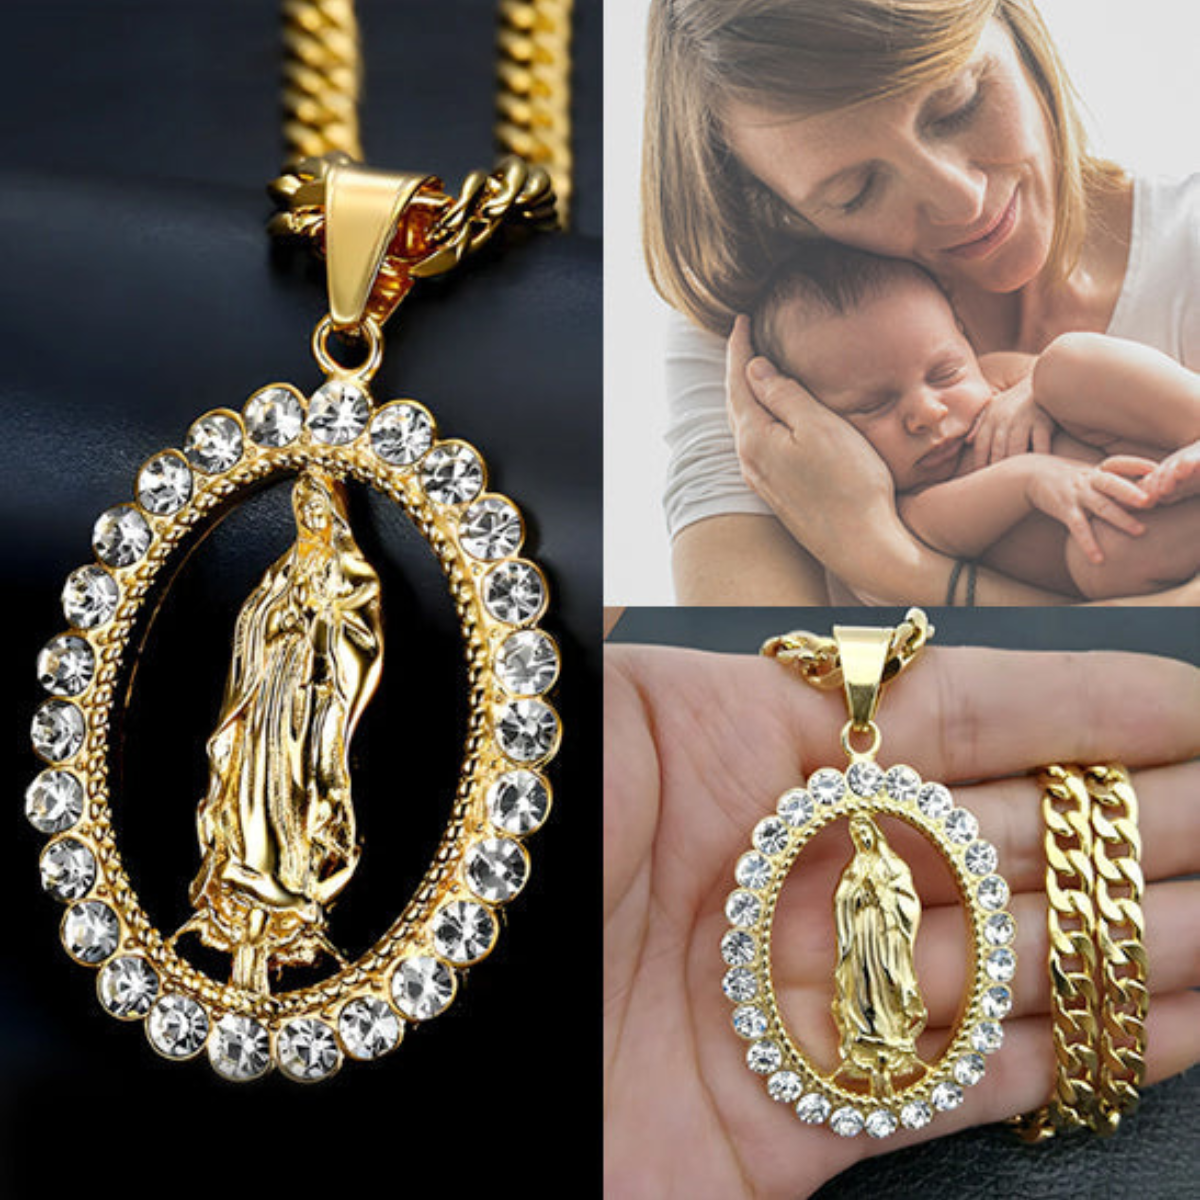 Collar Colgante Virgen María bañado en oro